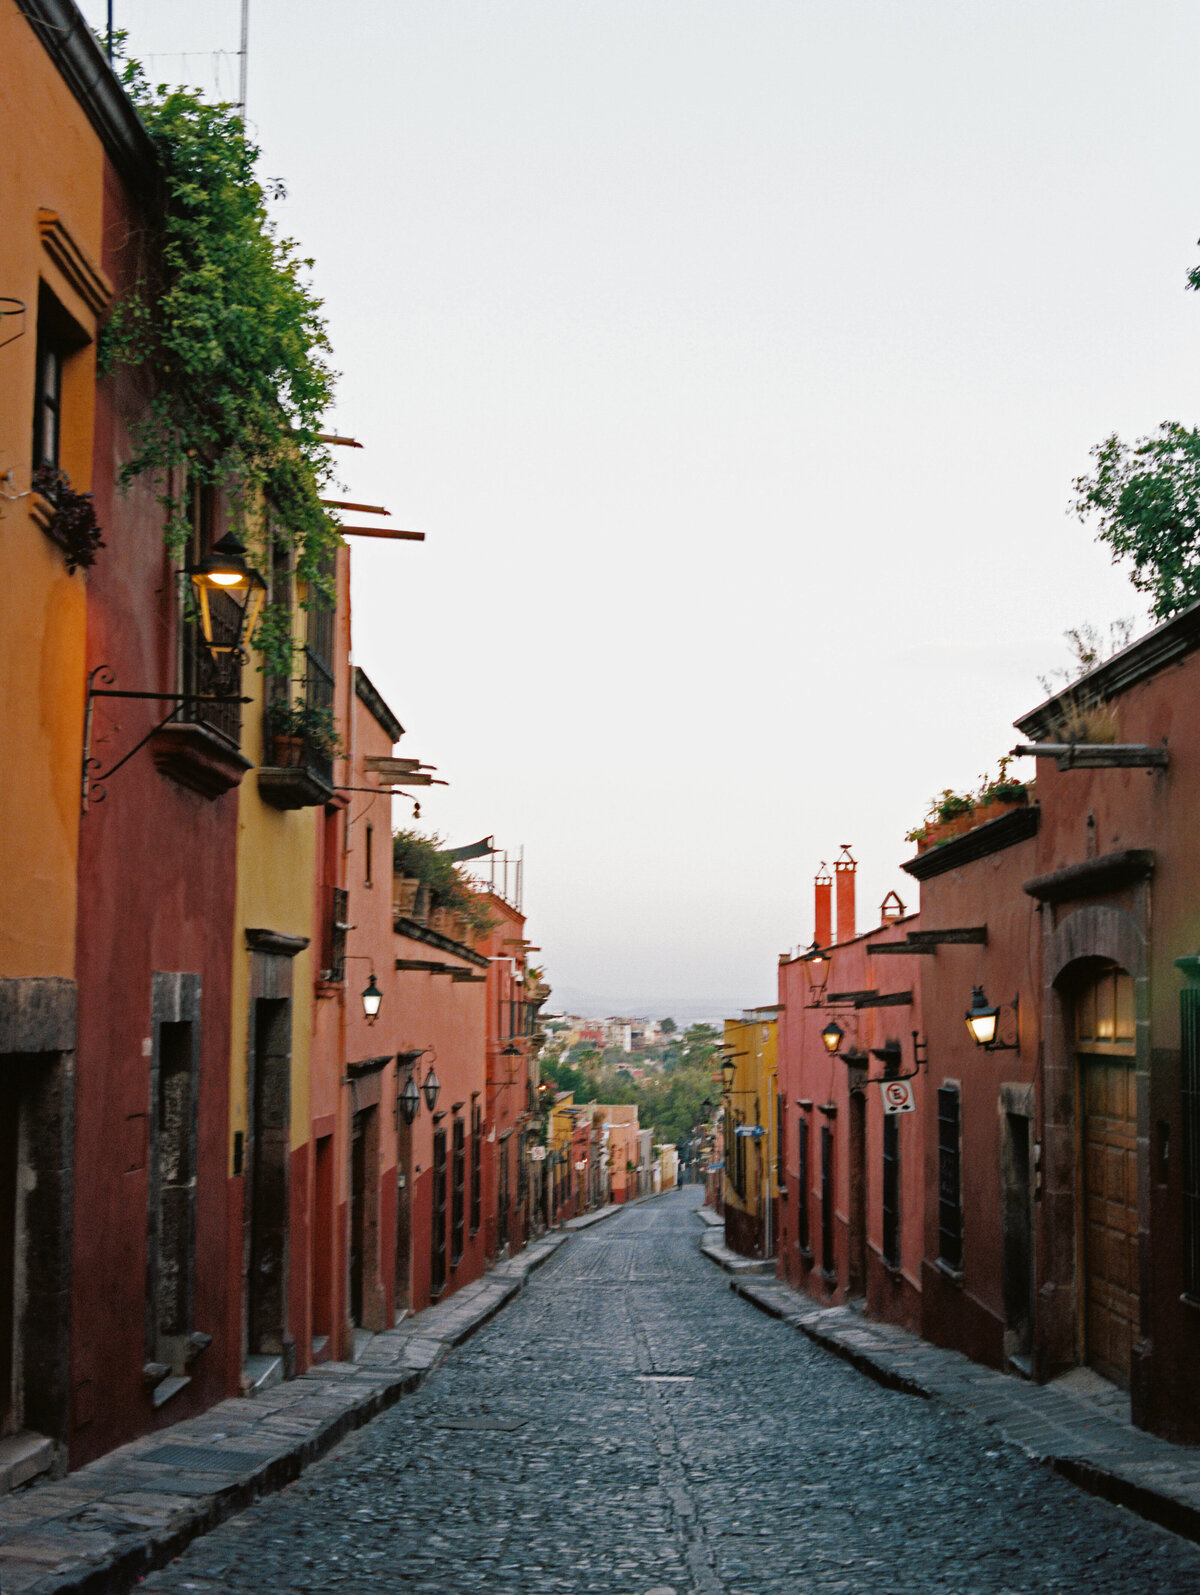 cobblestone street with colorful buildings in san miguel de allende